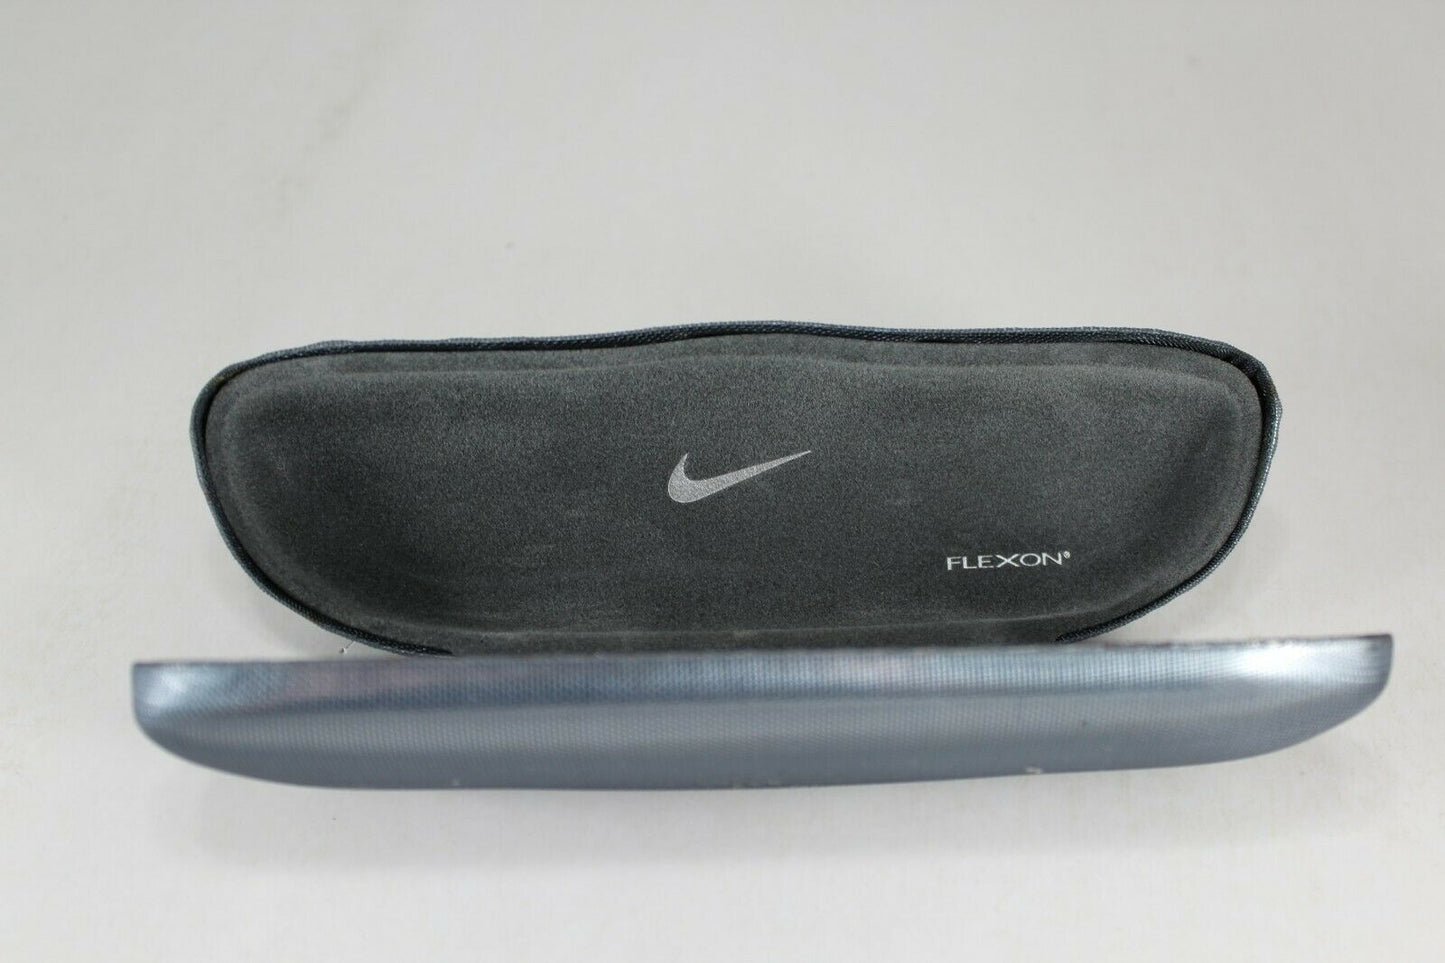 Nike NIKE 7255-001 53mm New Eyeglasses